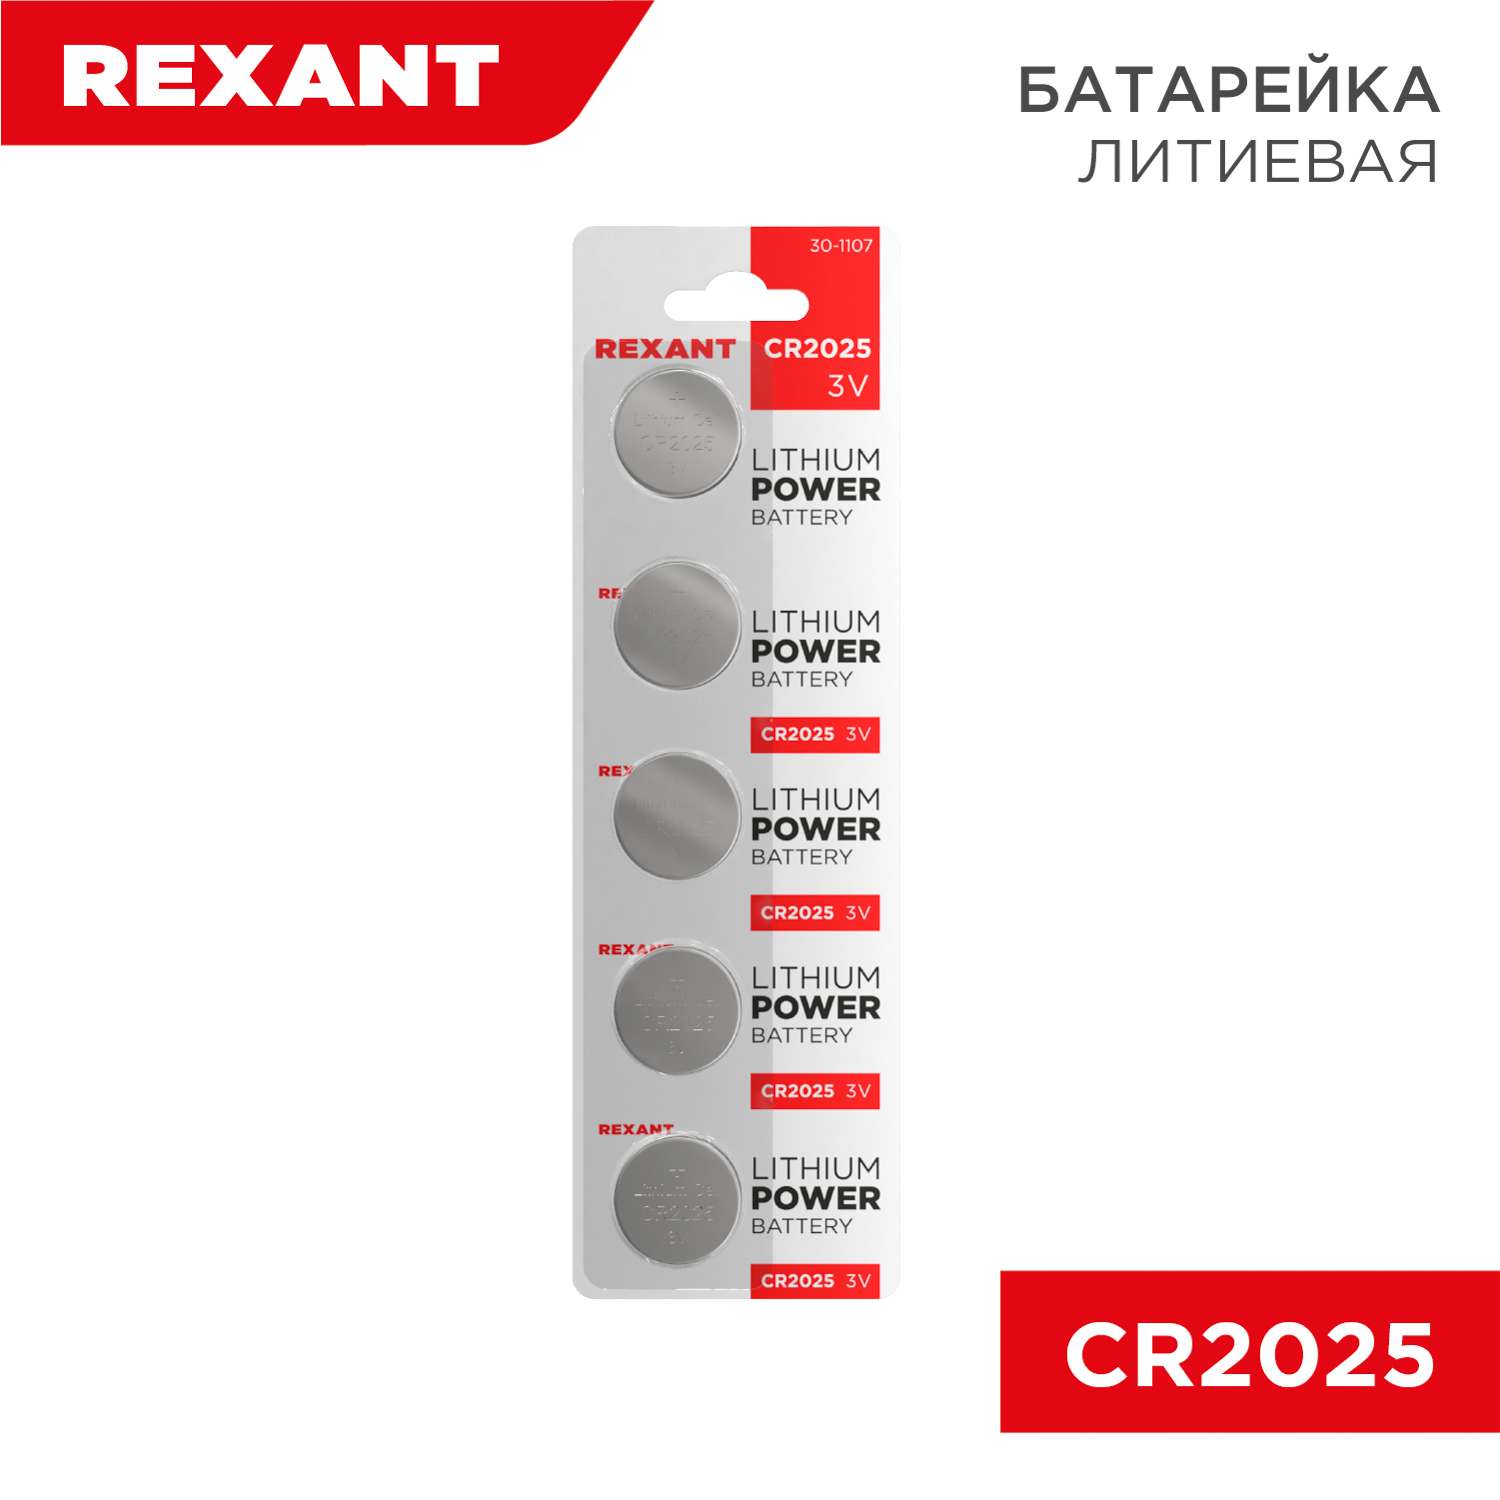 Батарейка REXANT литиевая CR2025 3В 5 штук - фото 1